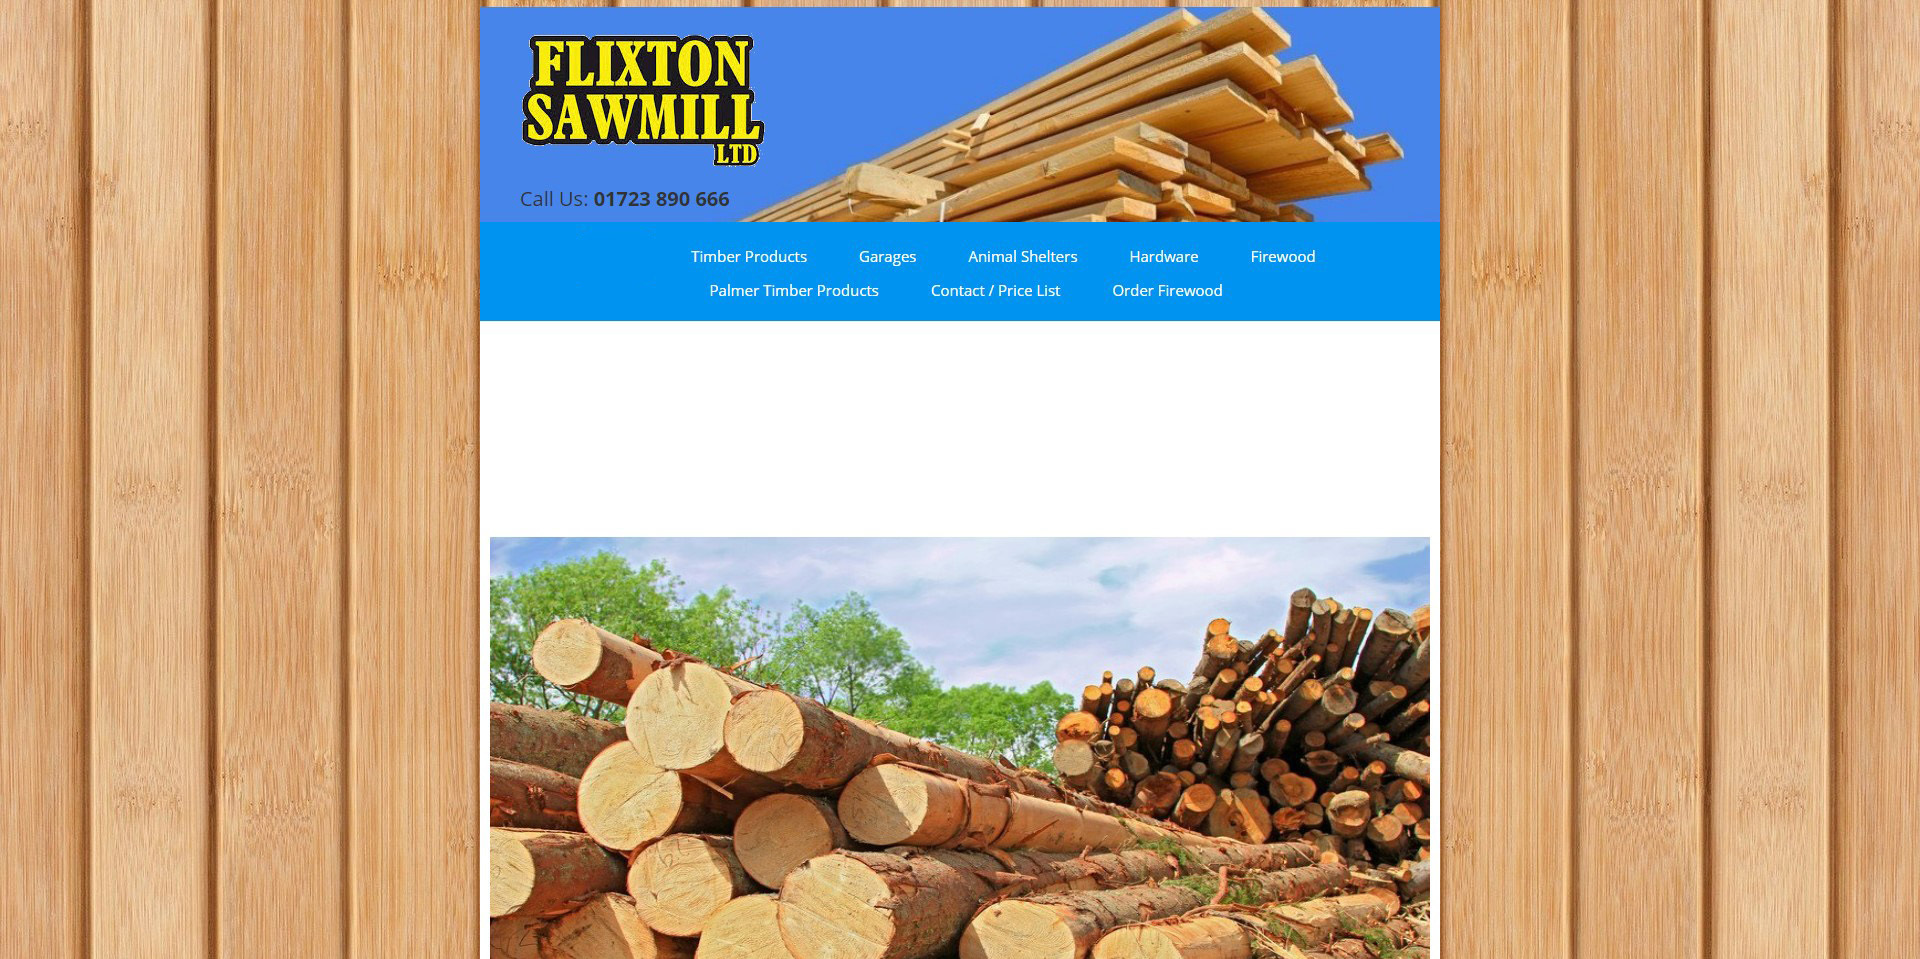 The old Flixton Sawmill website